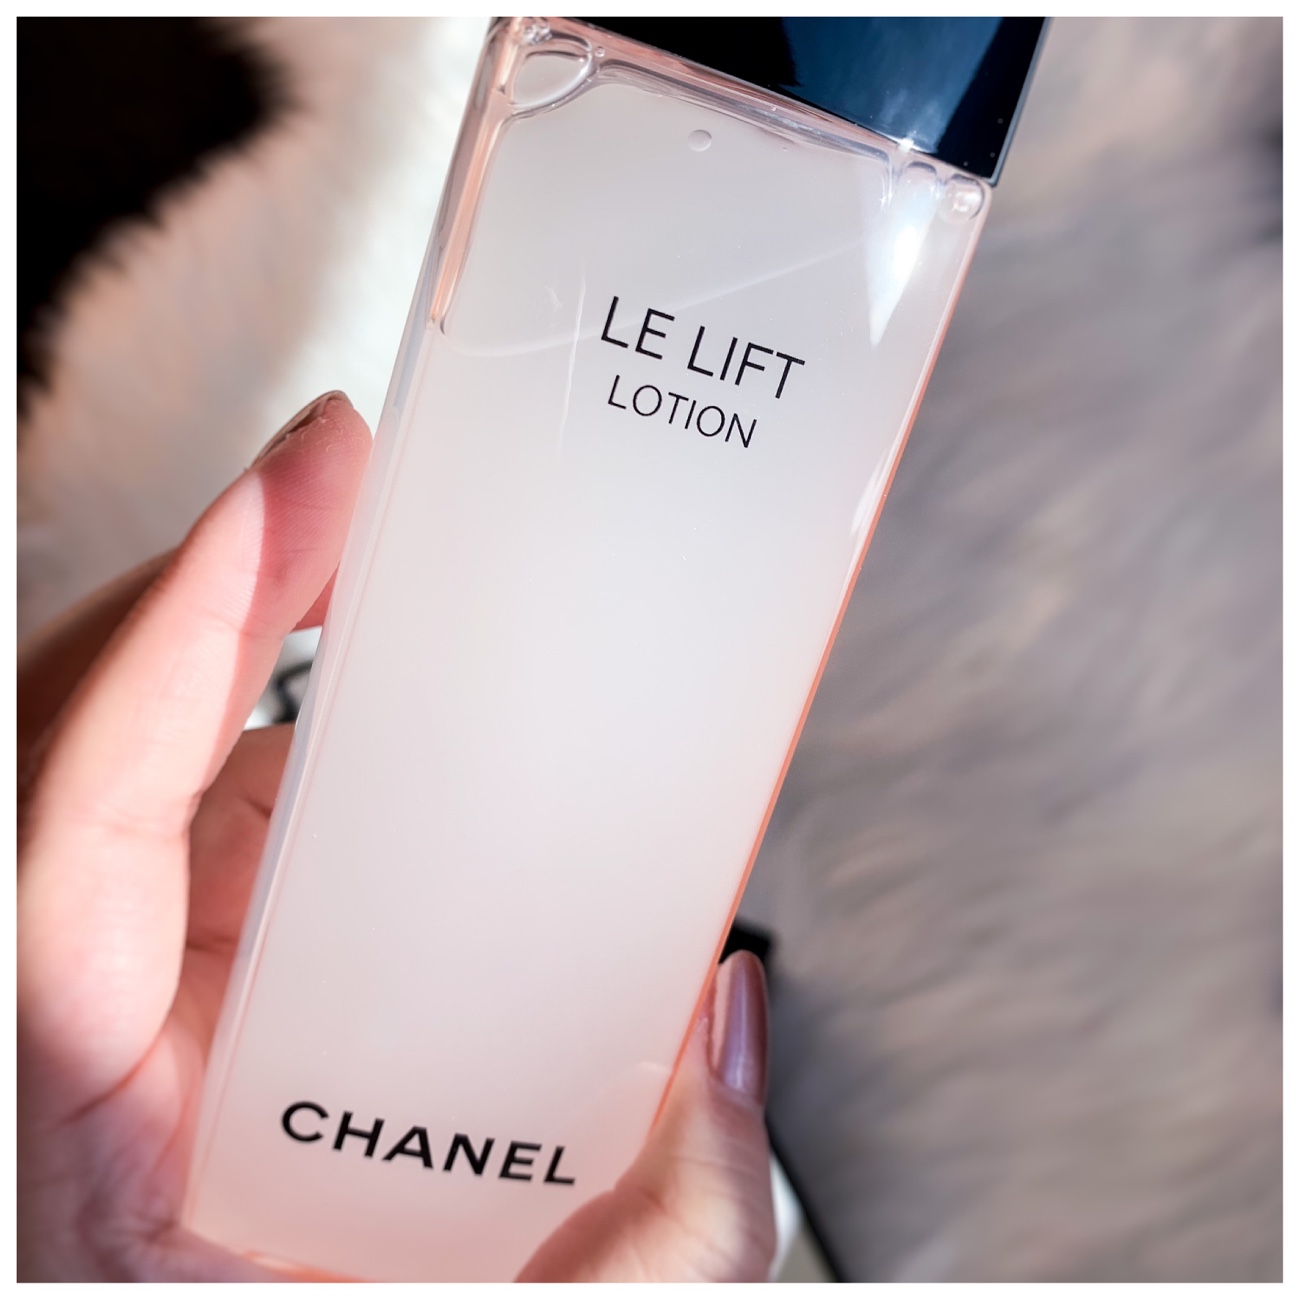 Chanel Le Lift Le Lotion